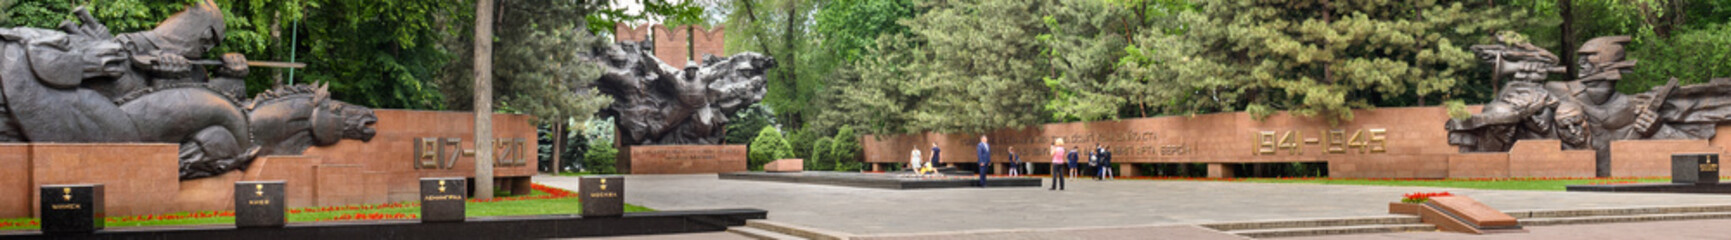 Almaty World War II Memorial